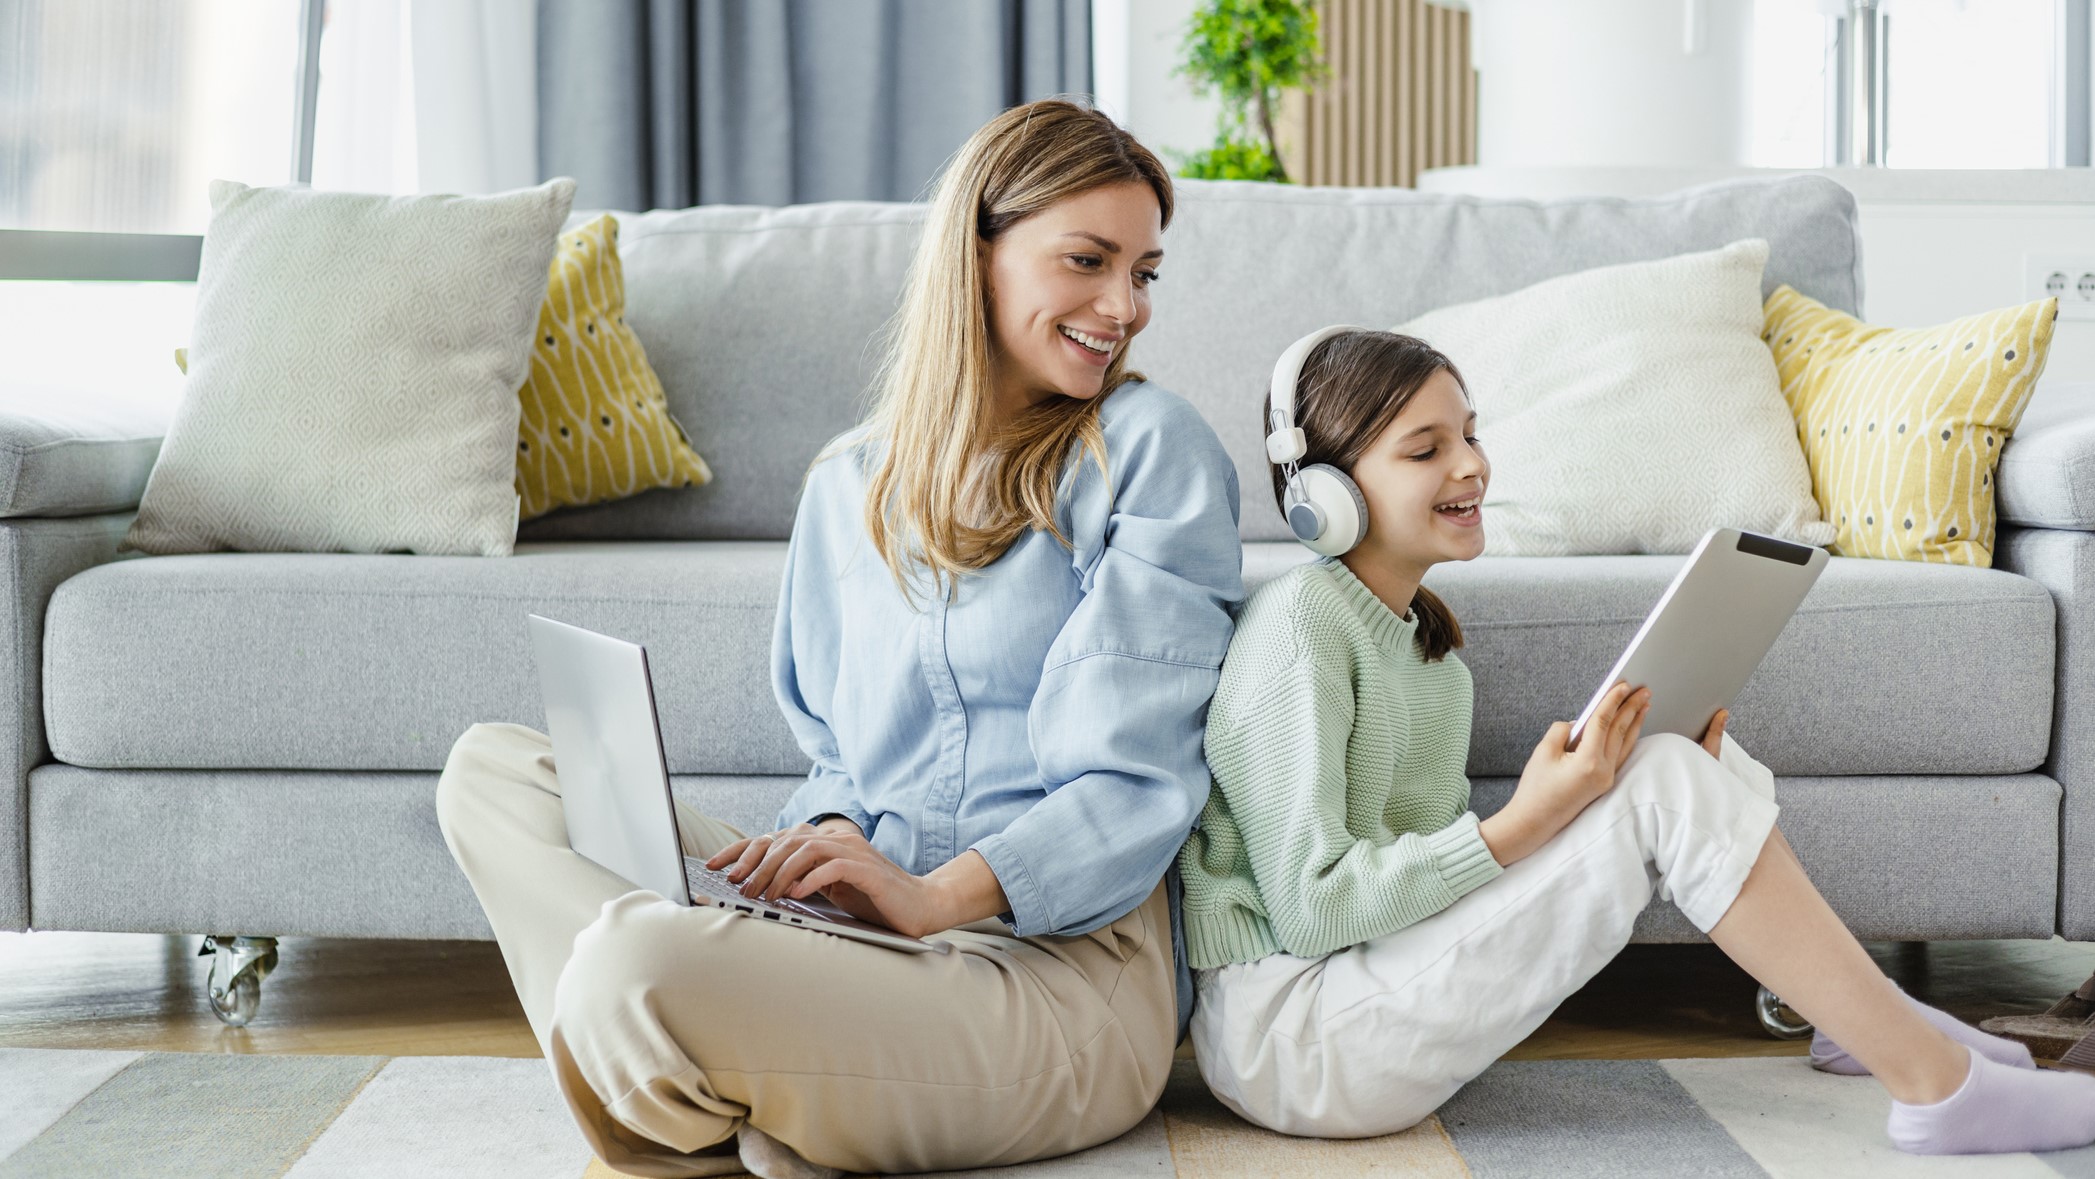 How to monitor your child's online activities | TechRadar